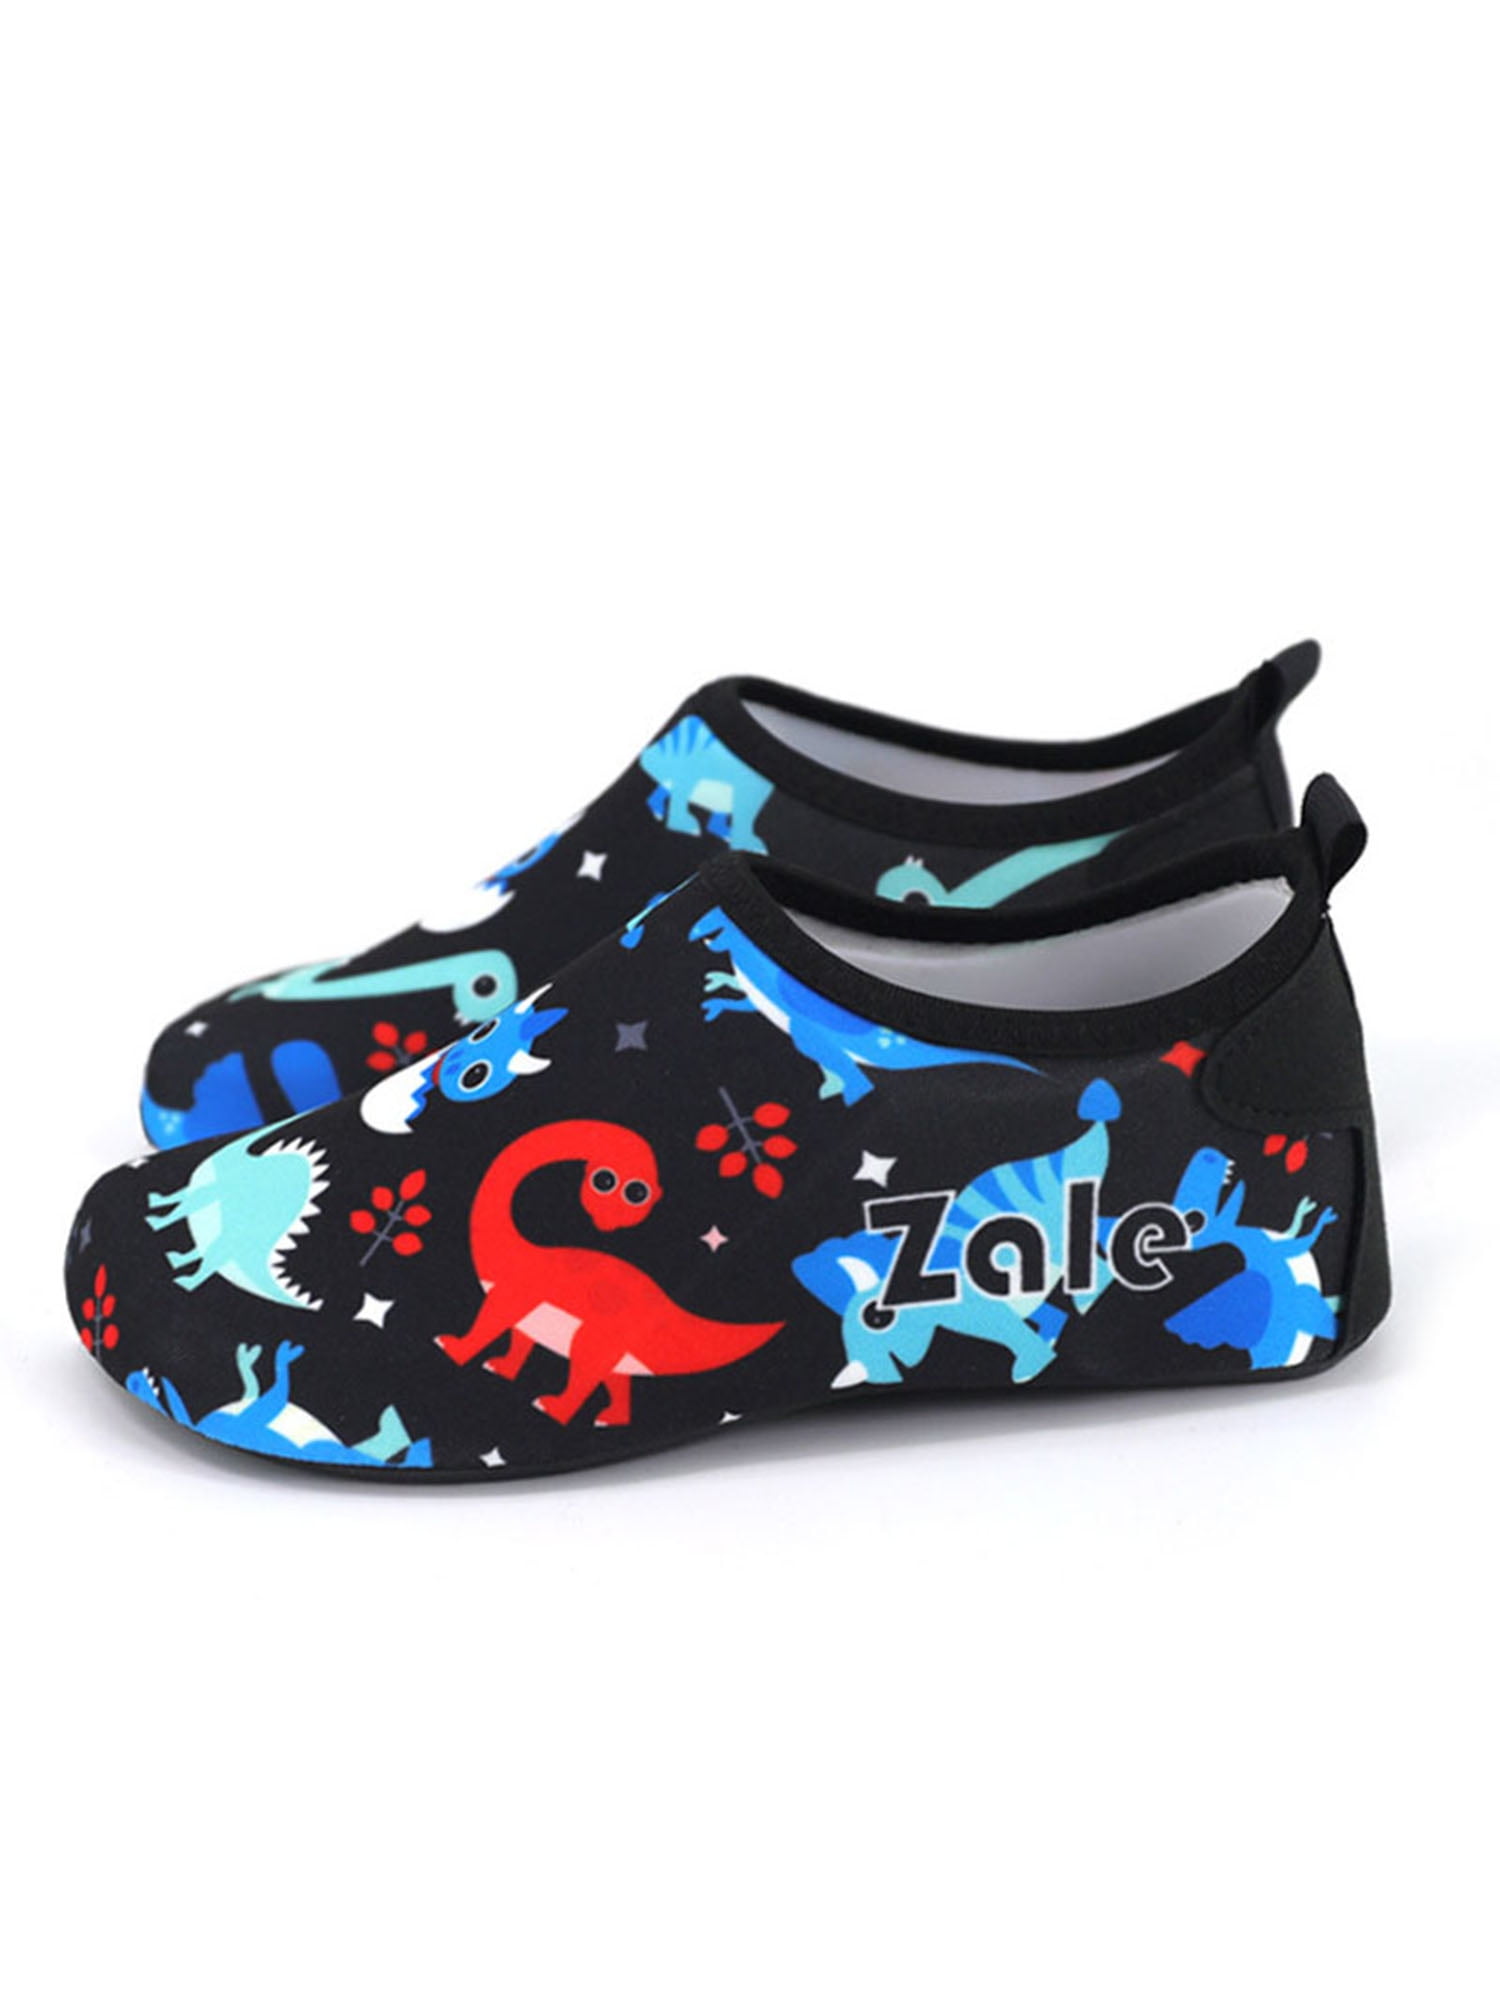 Toddler Kids Water Shoes Non-Slip Aqua Socks Sea Beach Swim Wetsuits Pool Size 